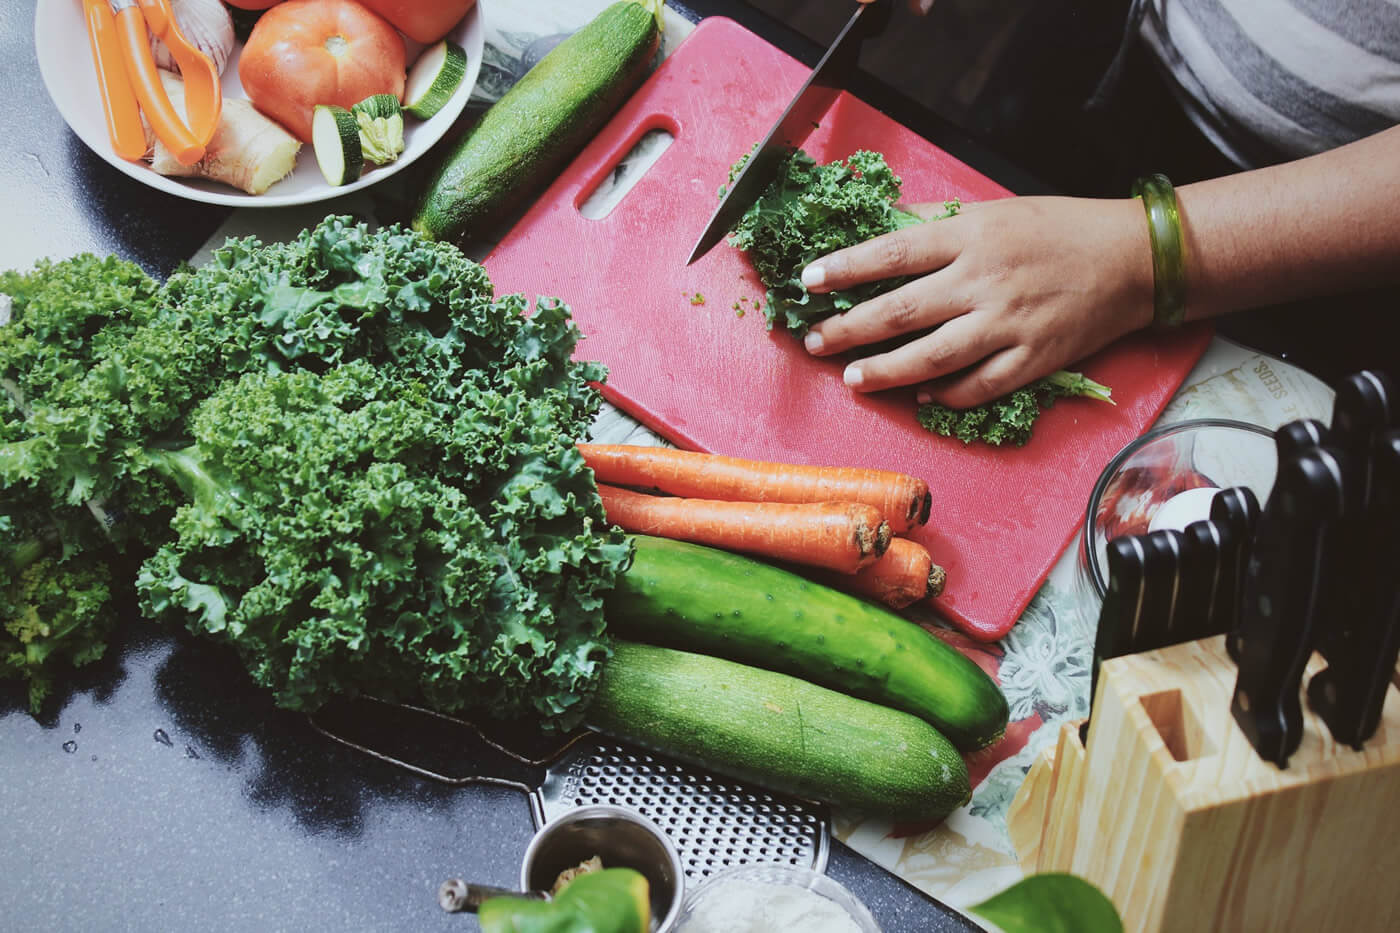 Master the art of chopping your veggies